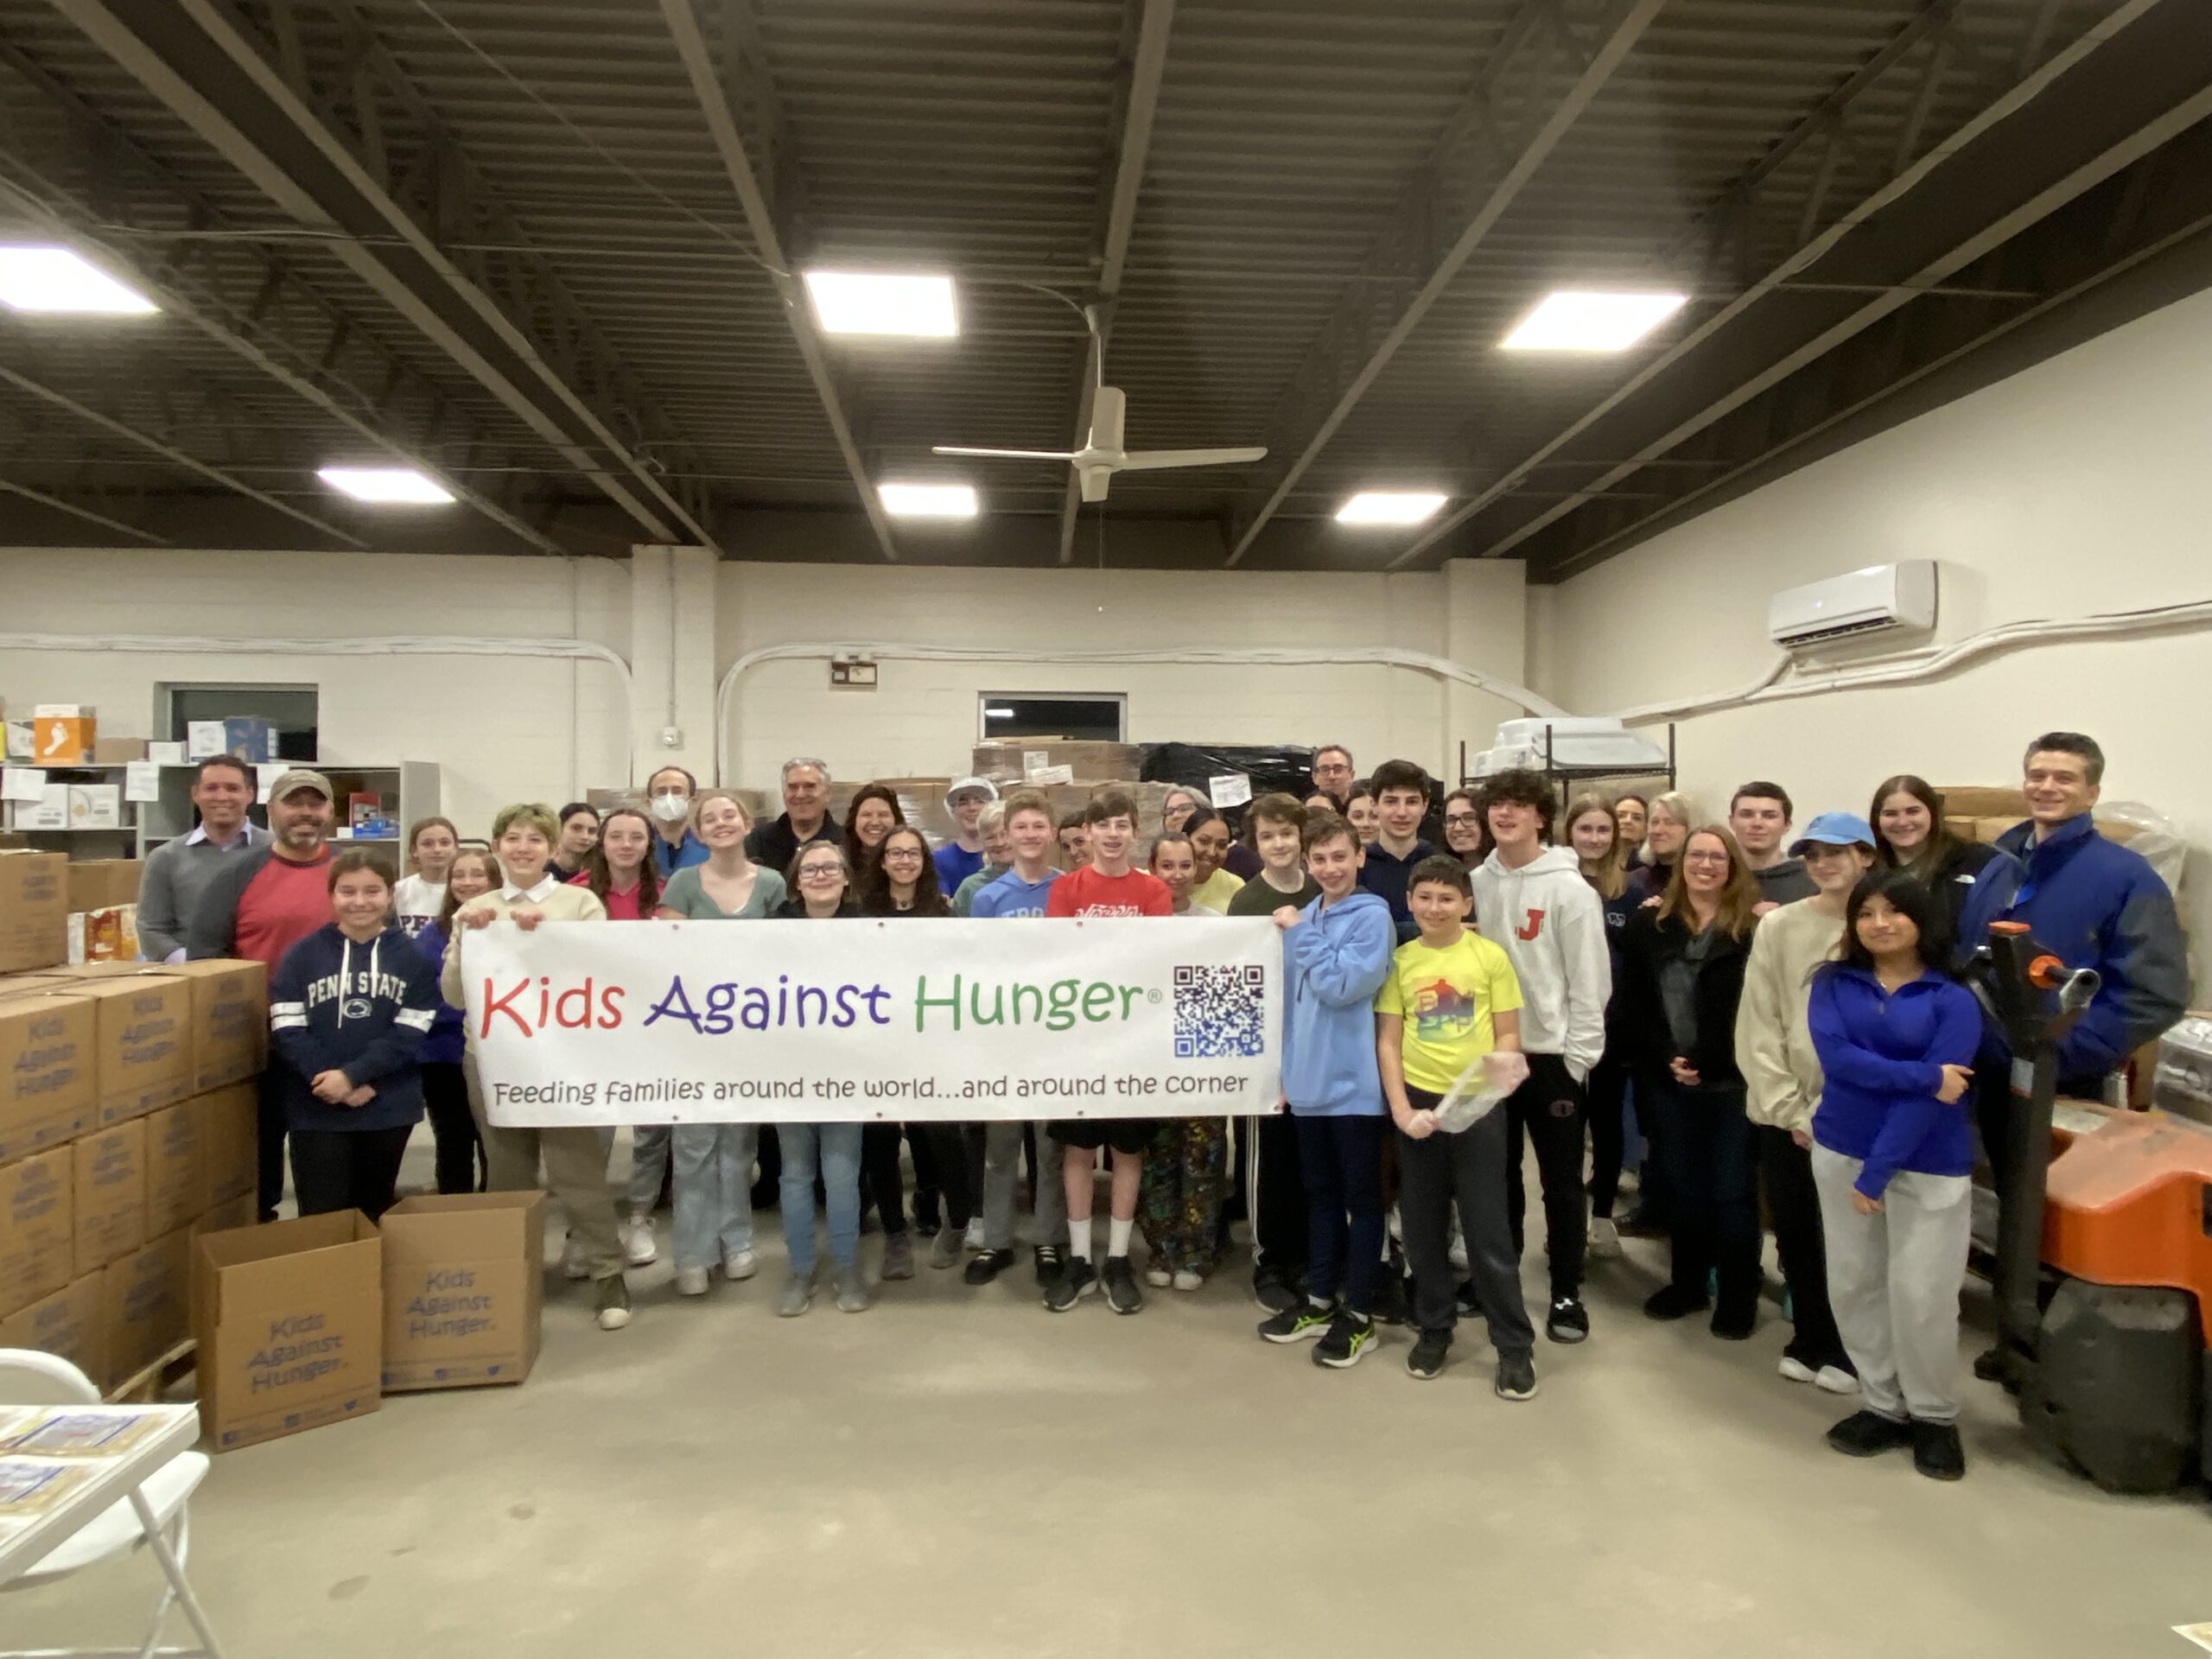 Our teens volunteering at Kids Against Hunger